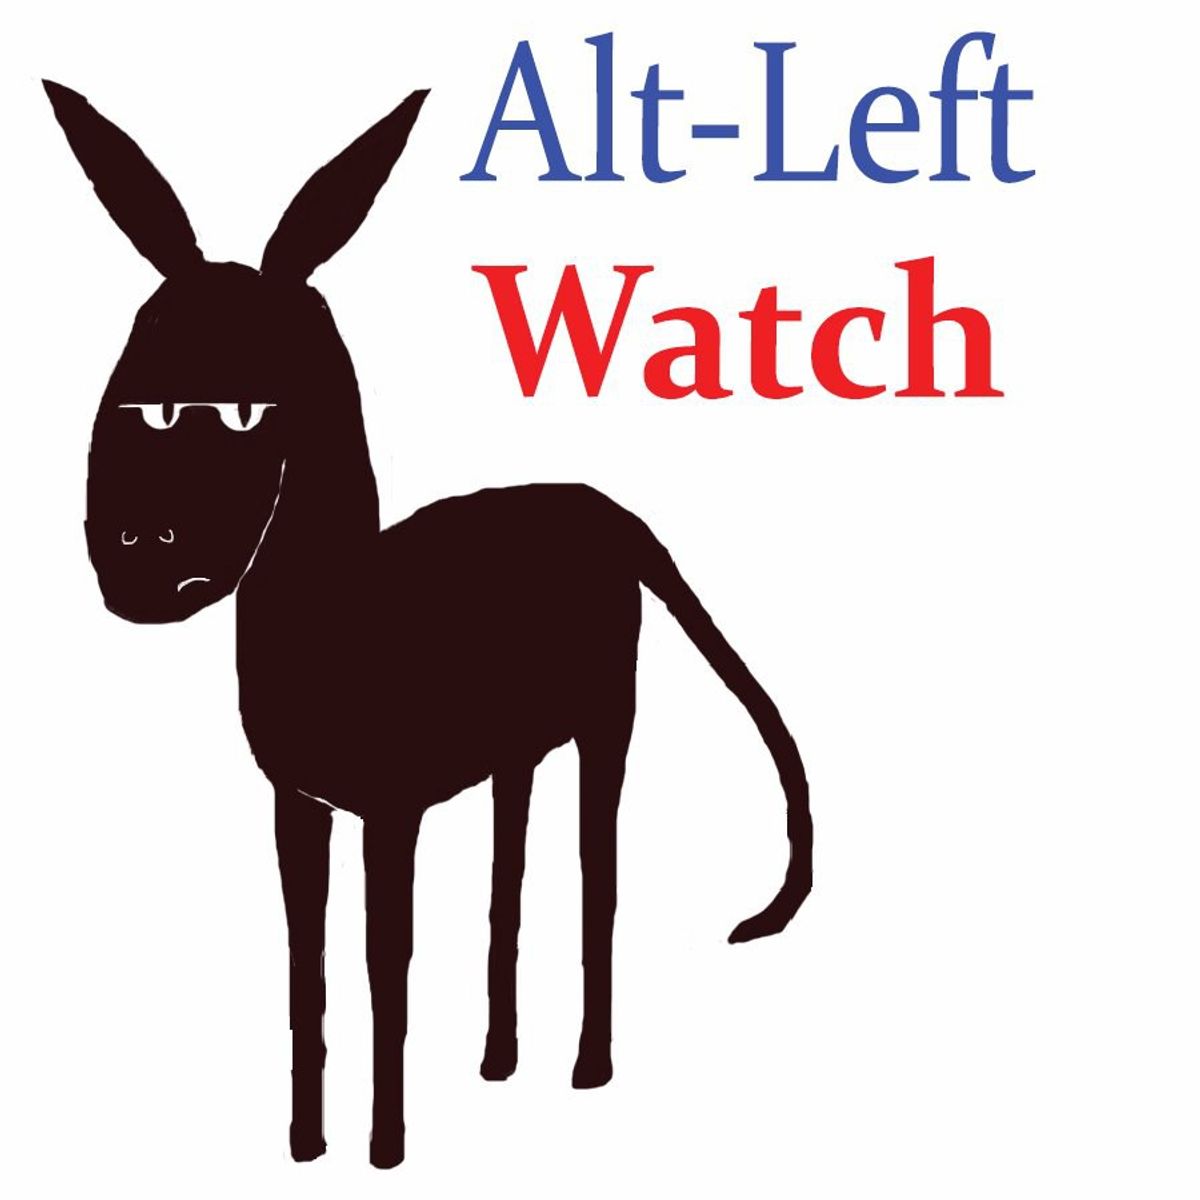 The Alt-Left: a new way forward for progressives